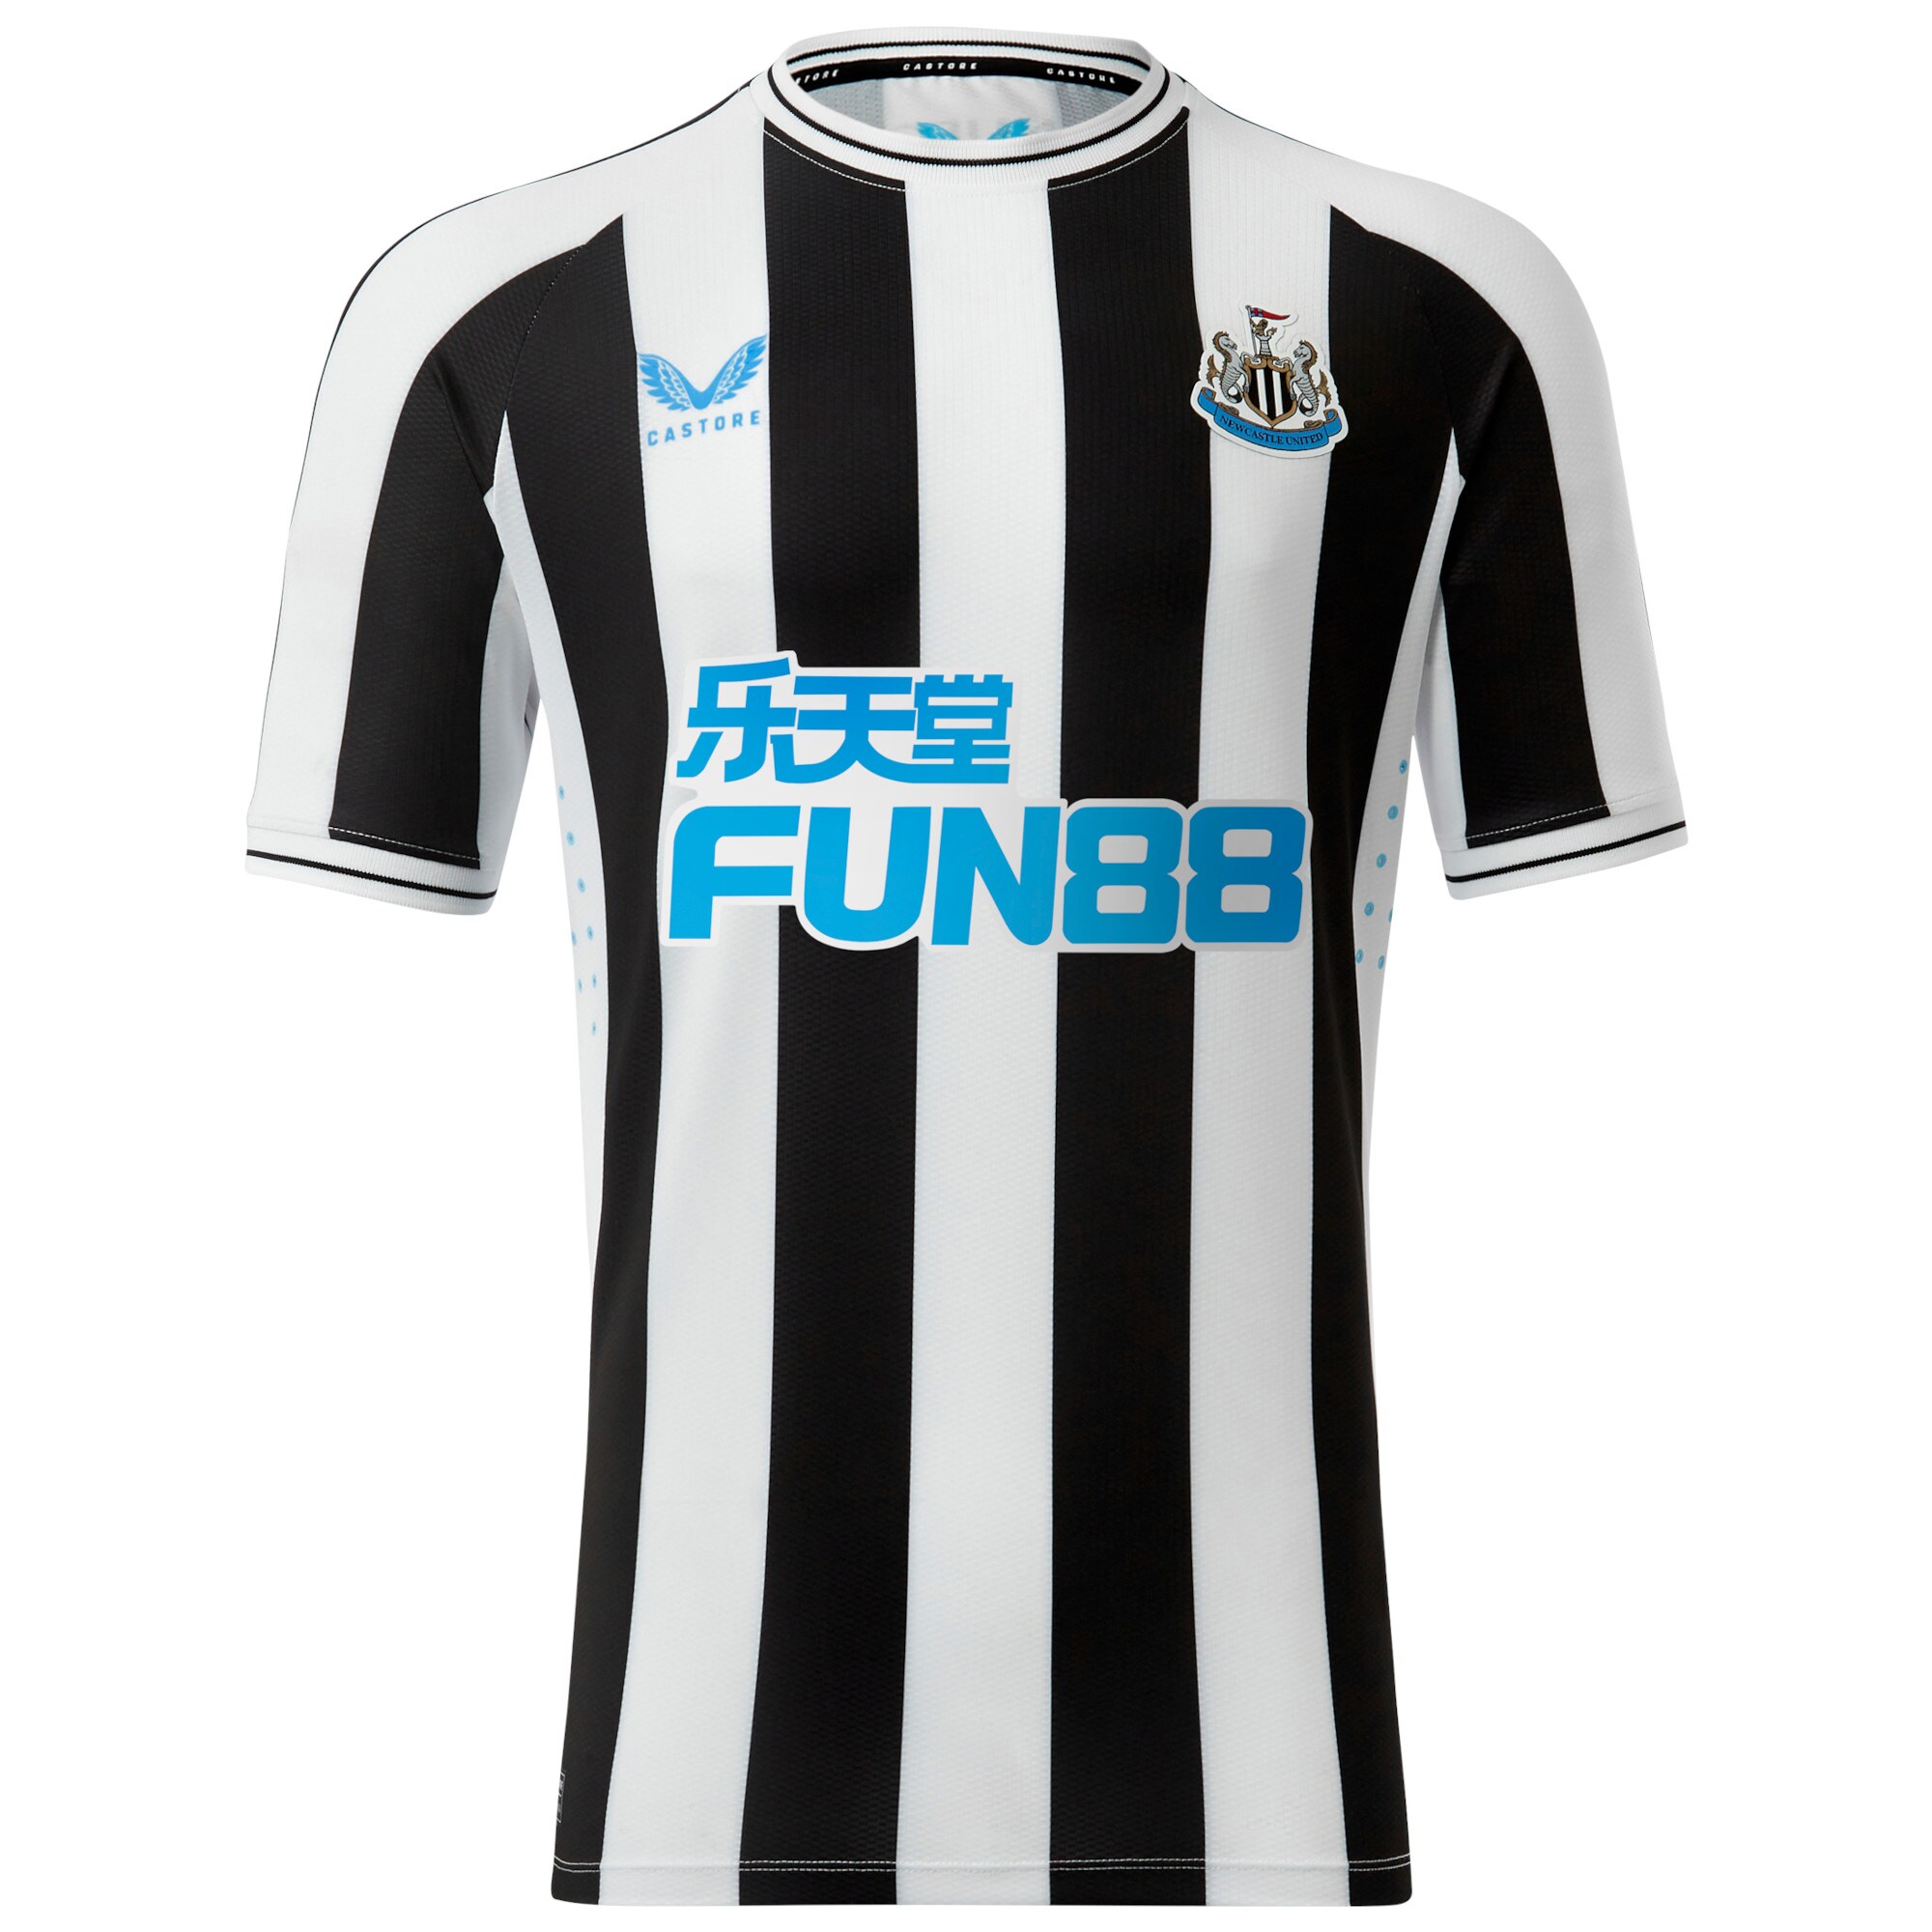 Newcastle United Home Pro Shirt 2022-23 with Saint-Maximin 10 printing